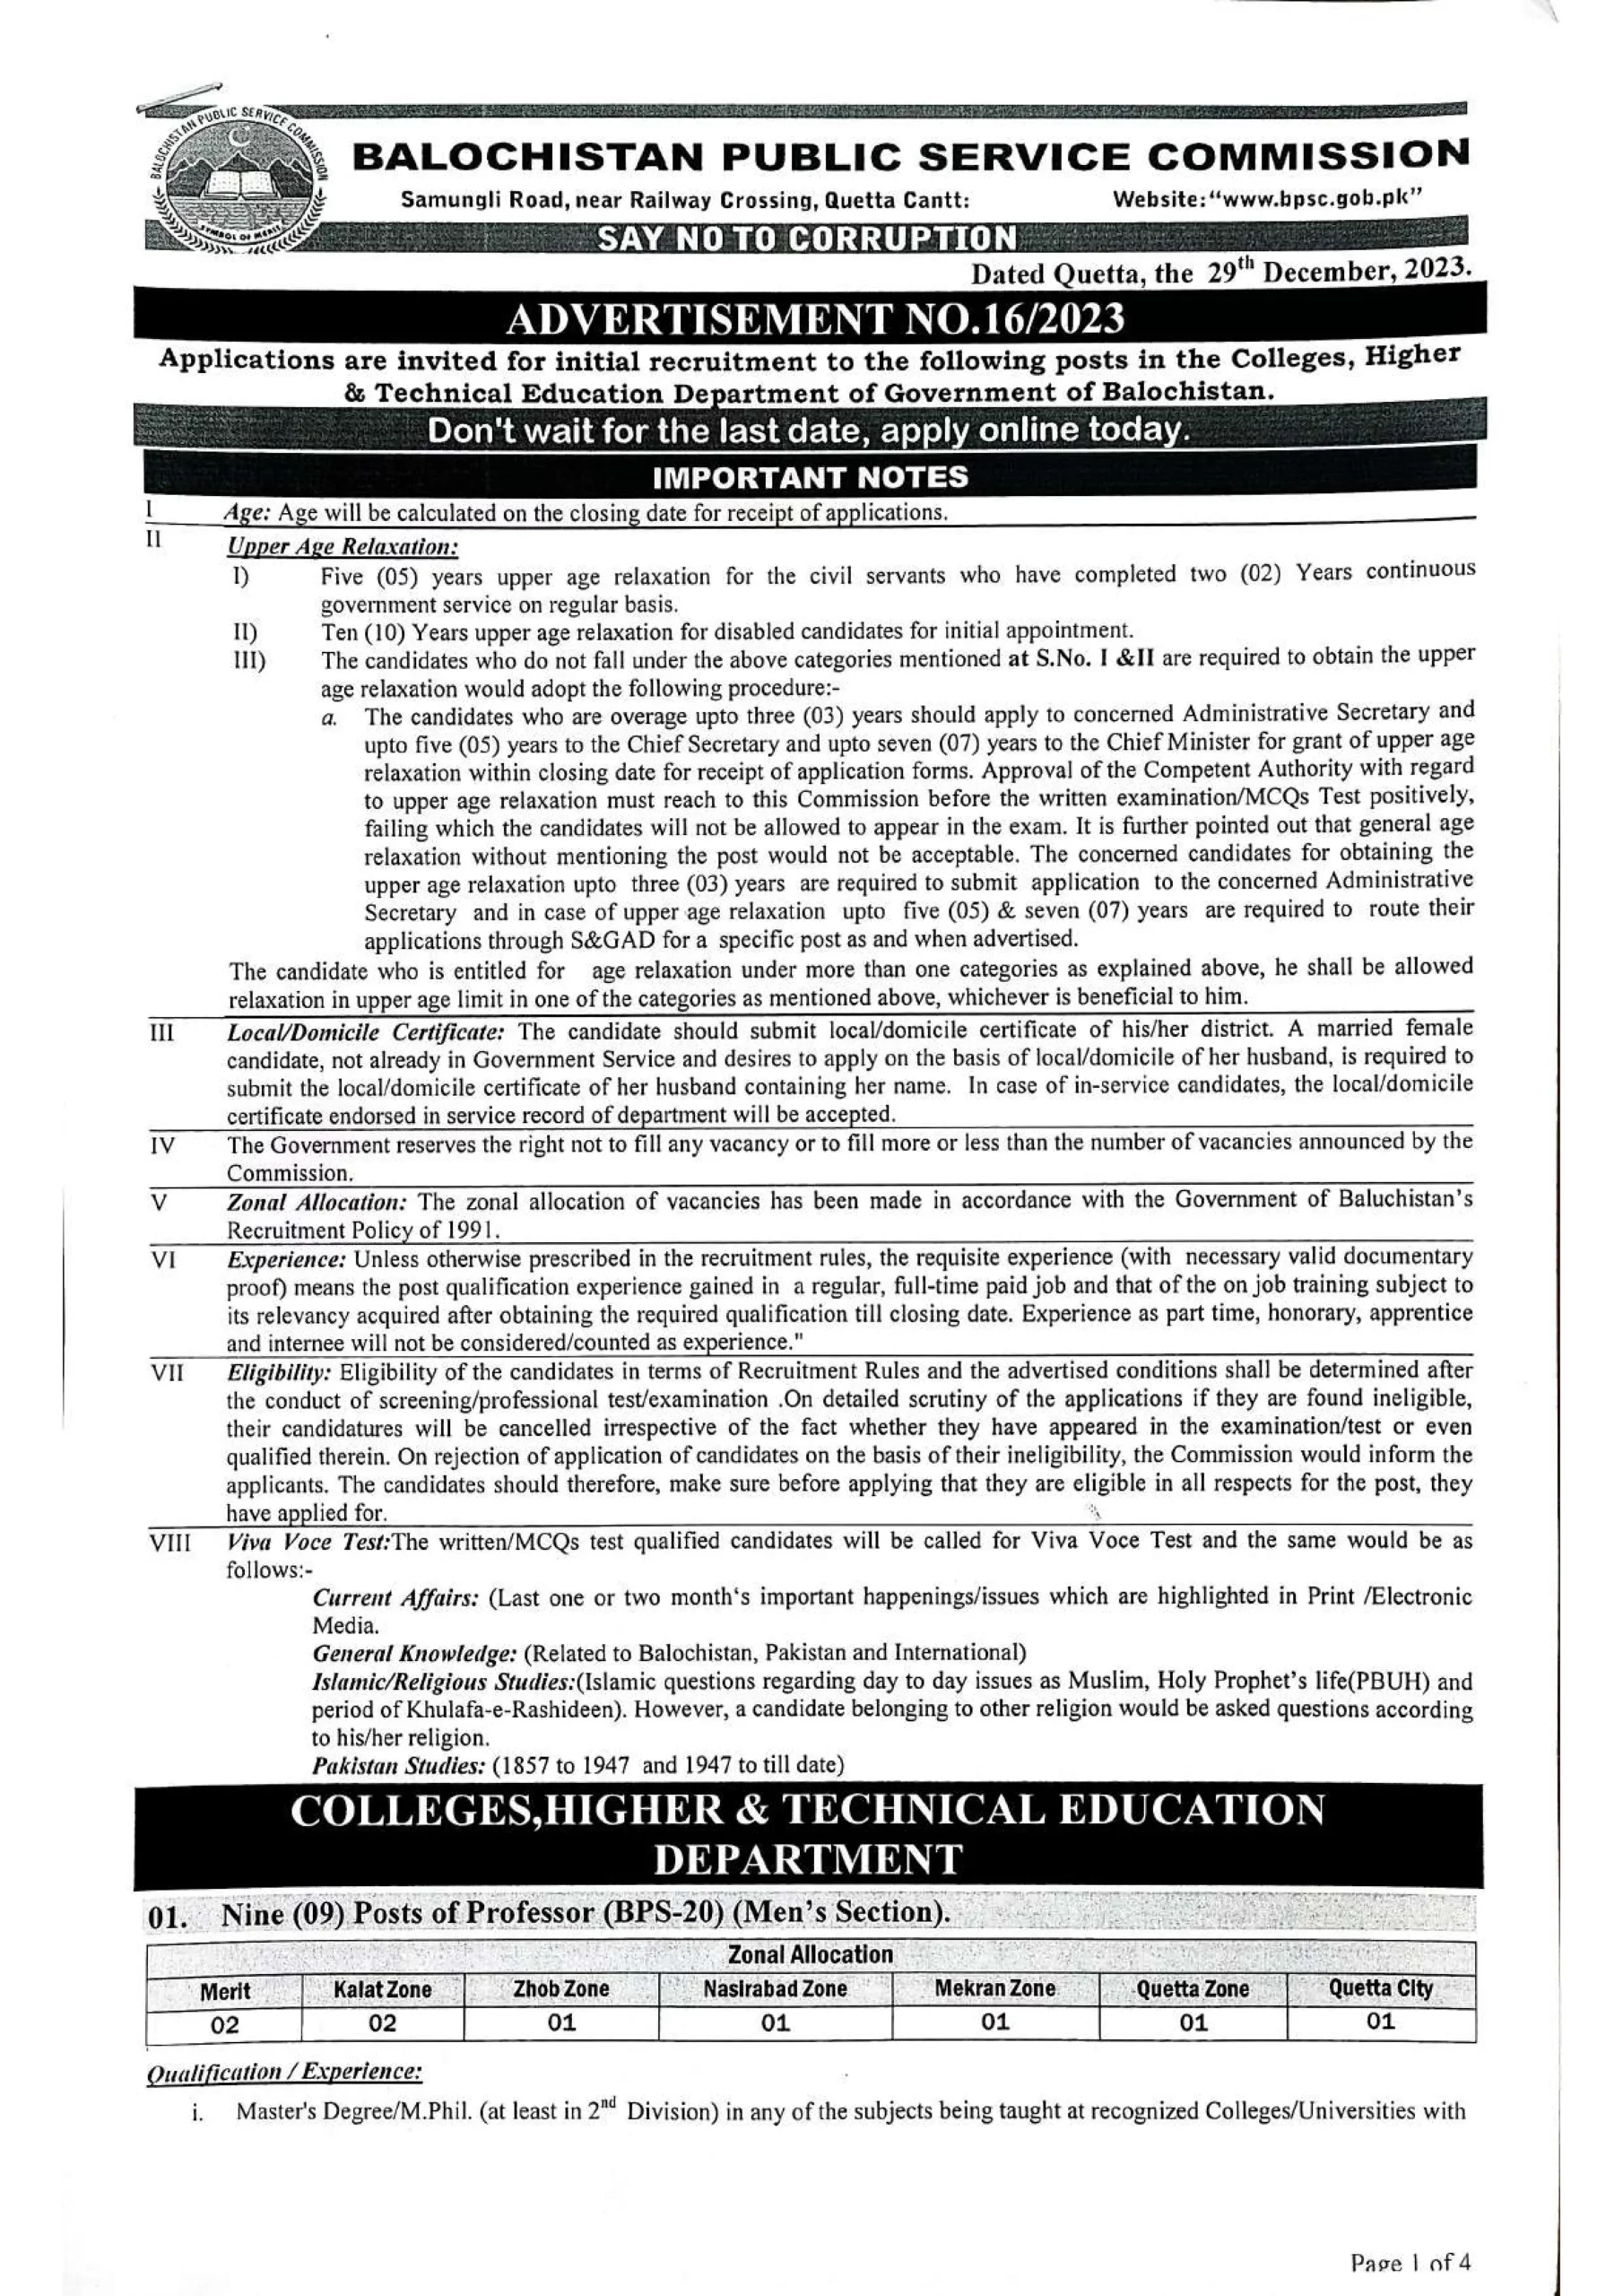 BPSC Jobs 2024 Balochistan Public Service Commission Current Vacancies